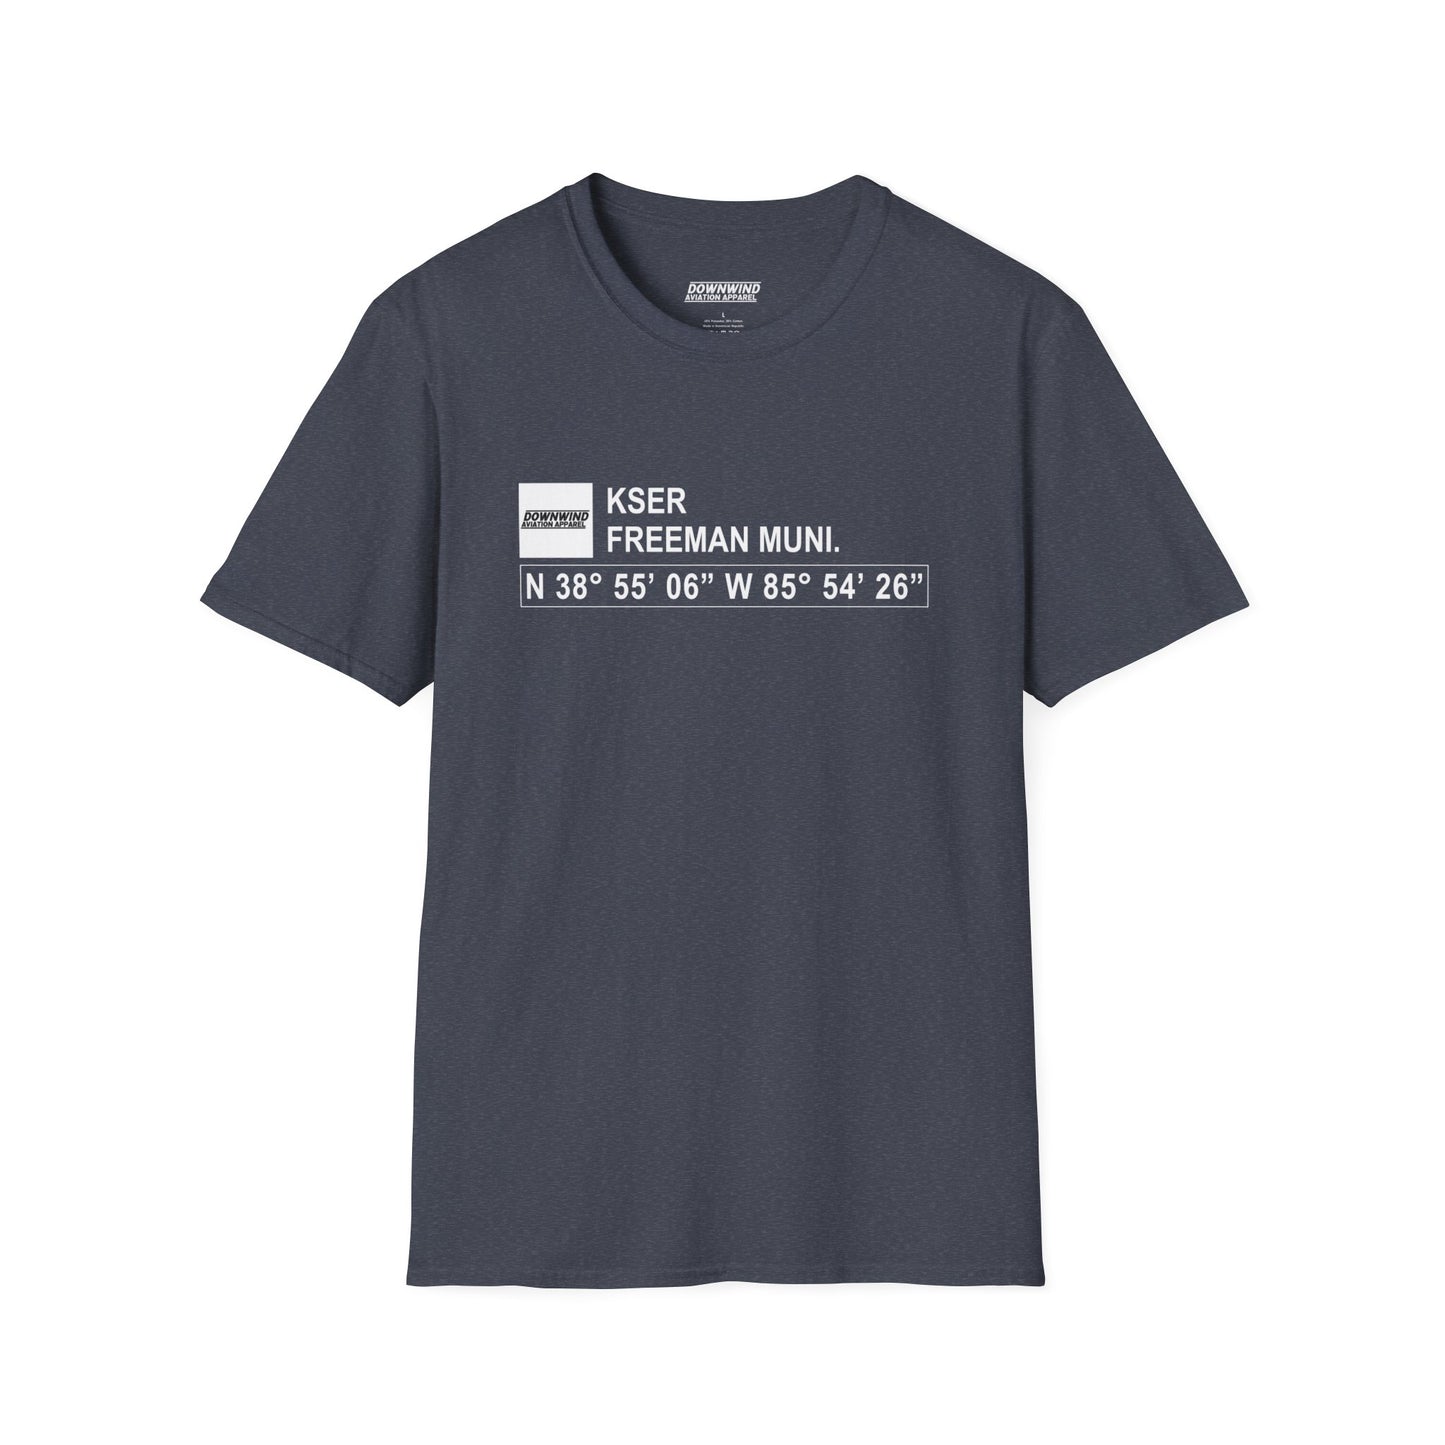 KSER / Freeman Muni. T-Shirt